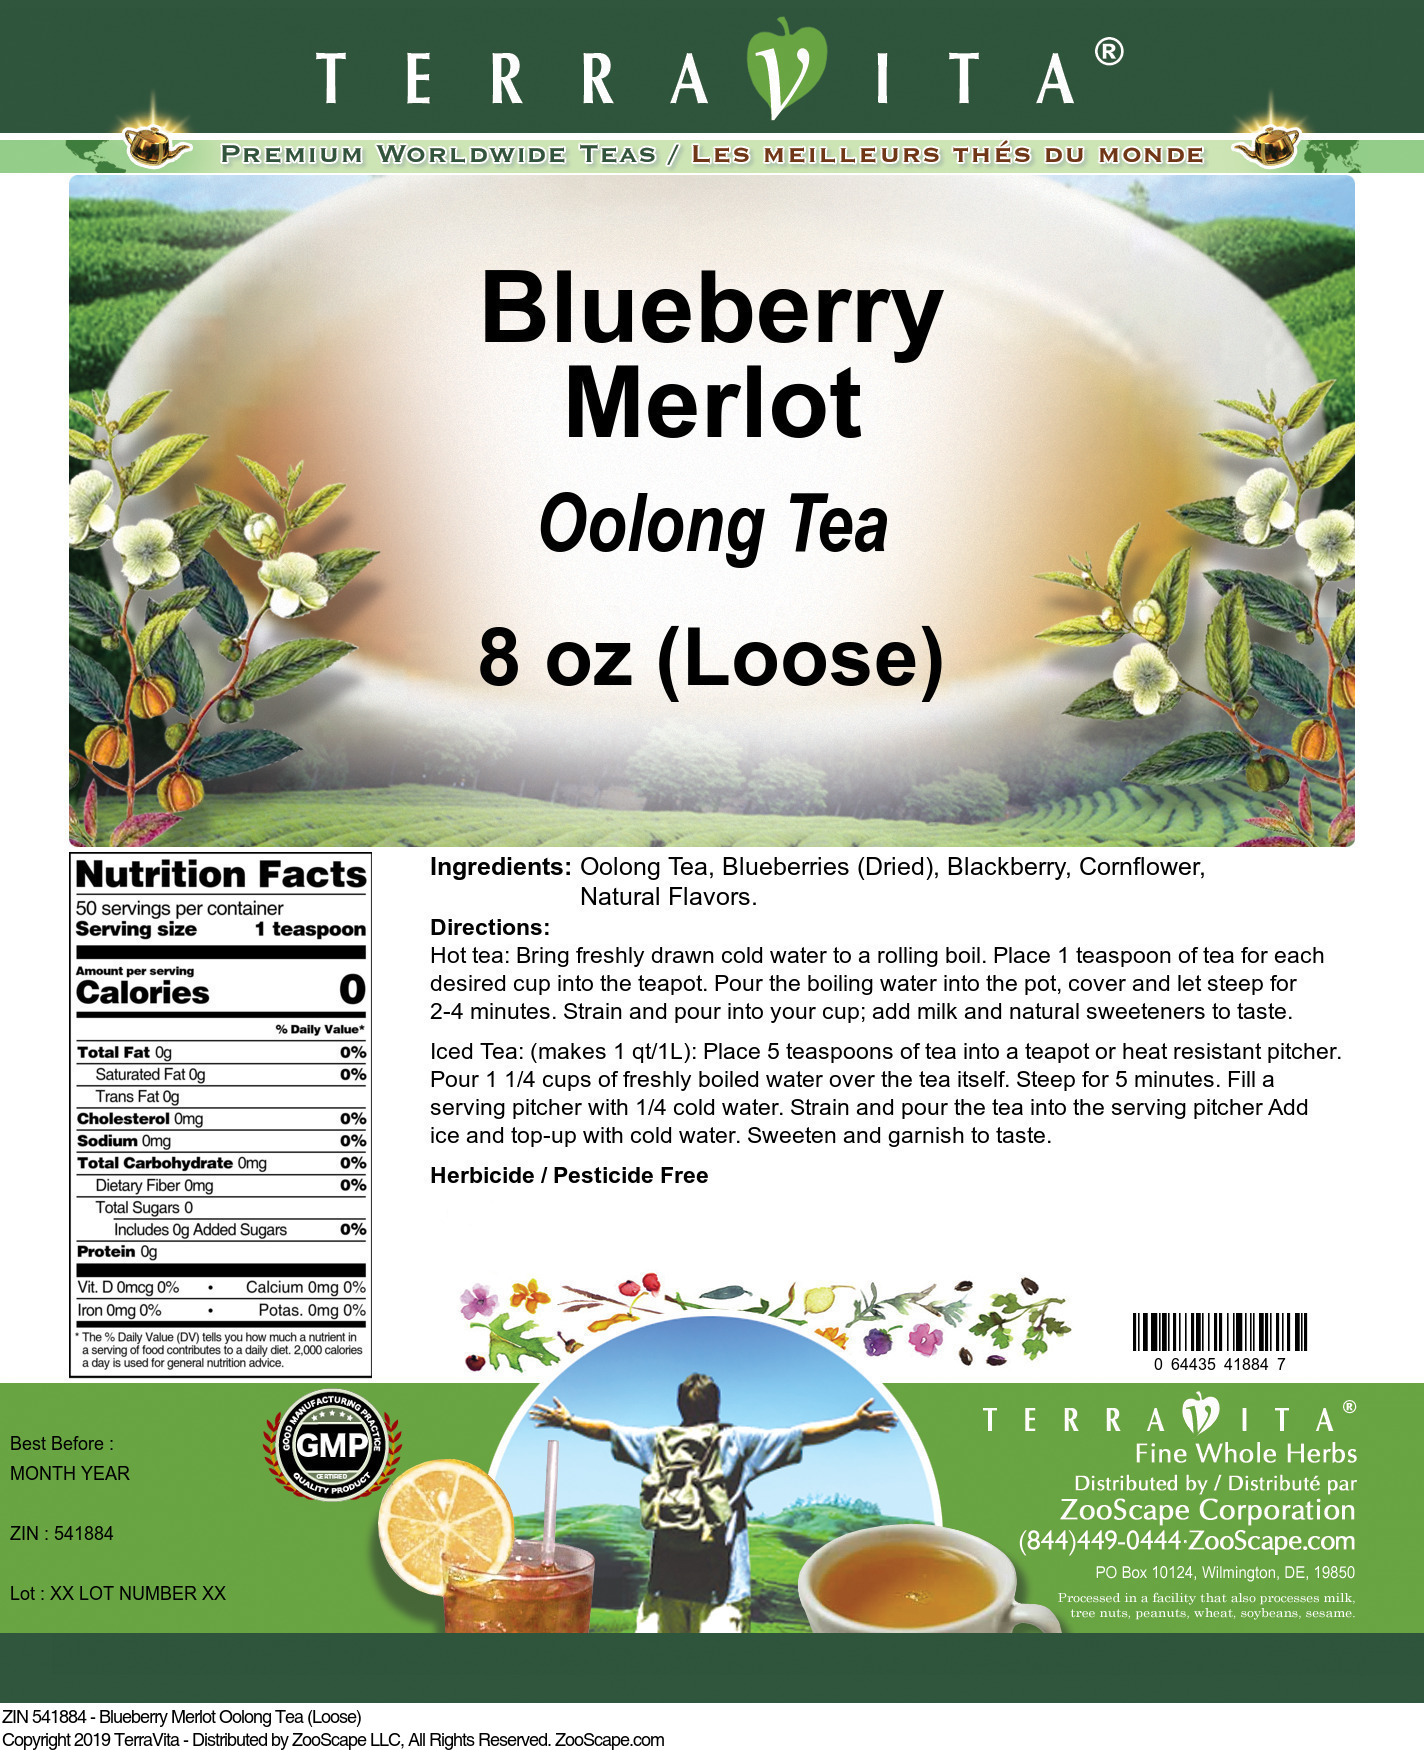 Blueberry Merlot Oolong Tea (Loose) - Label